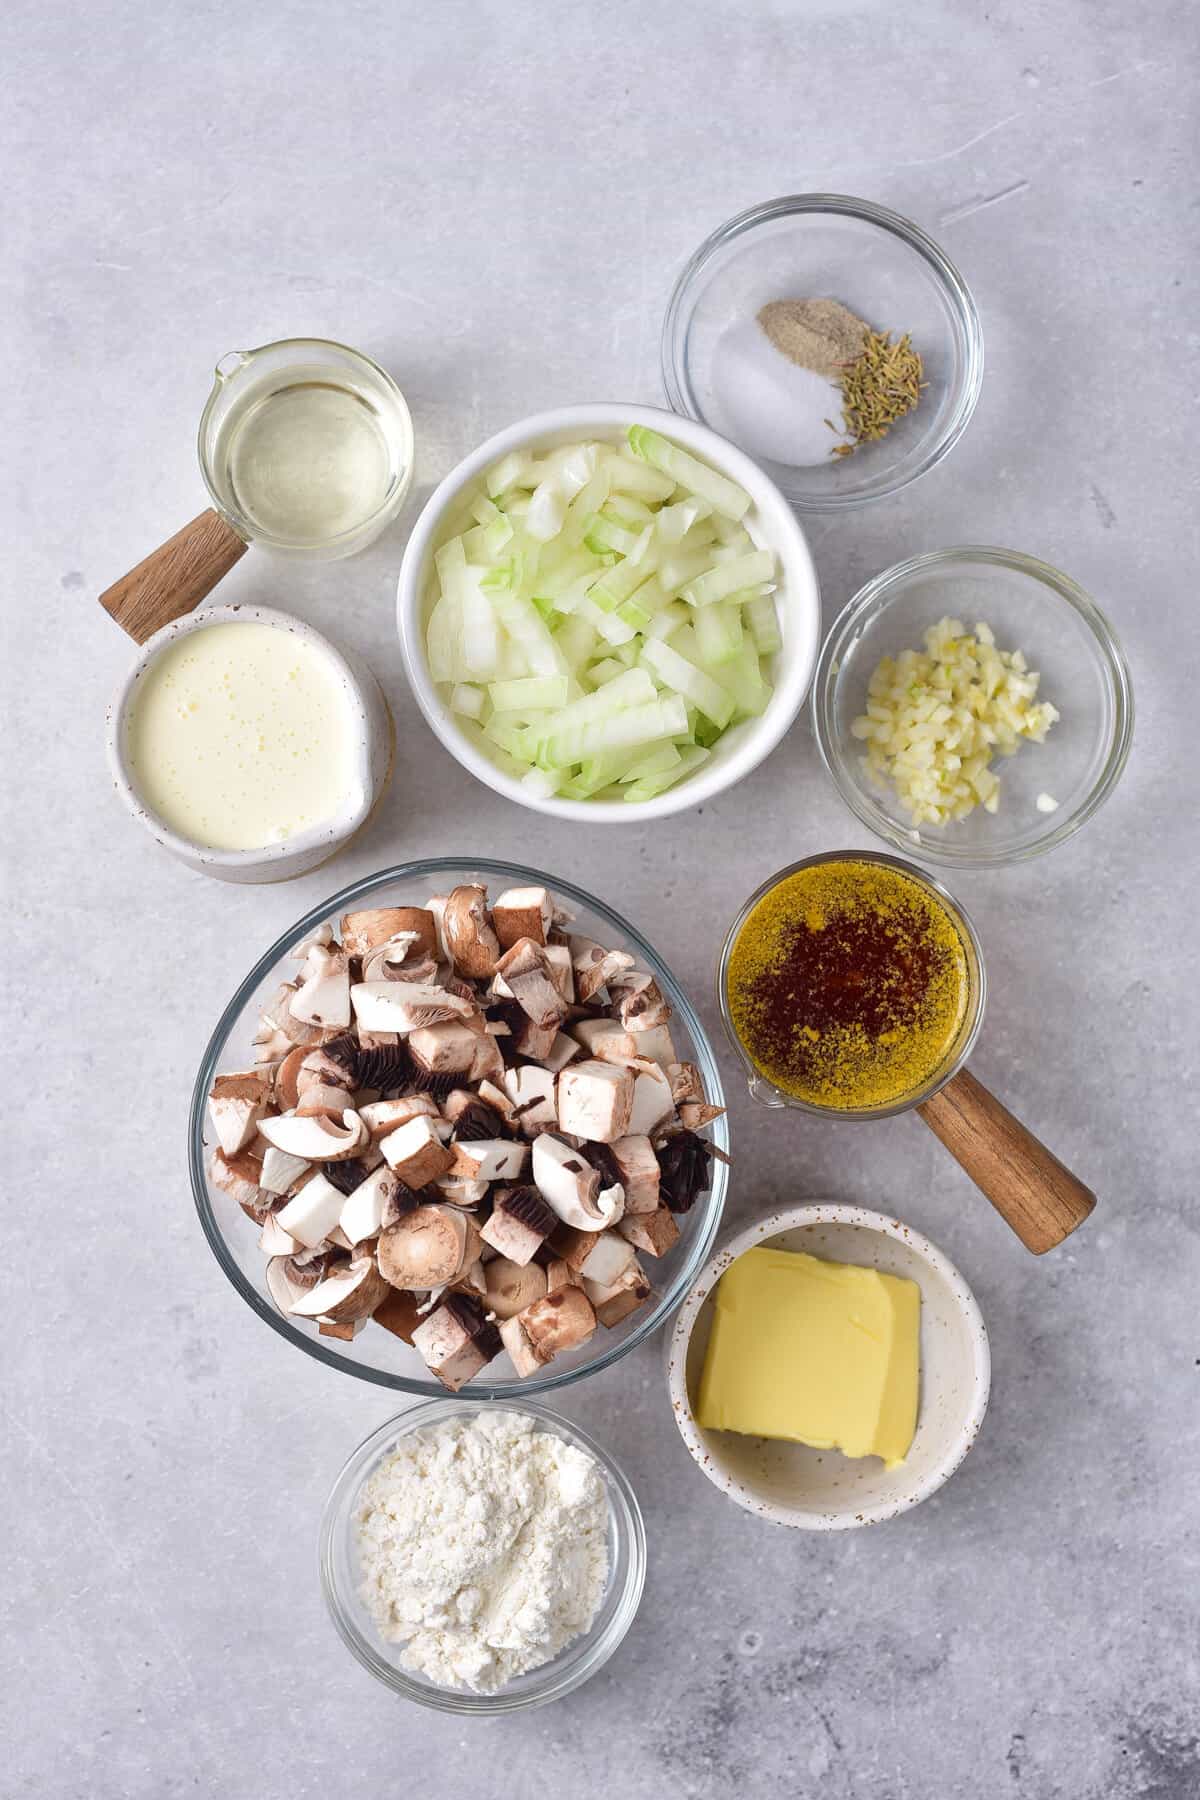 Ingredients for creamy mushroom soup.